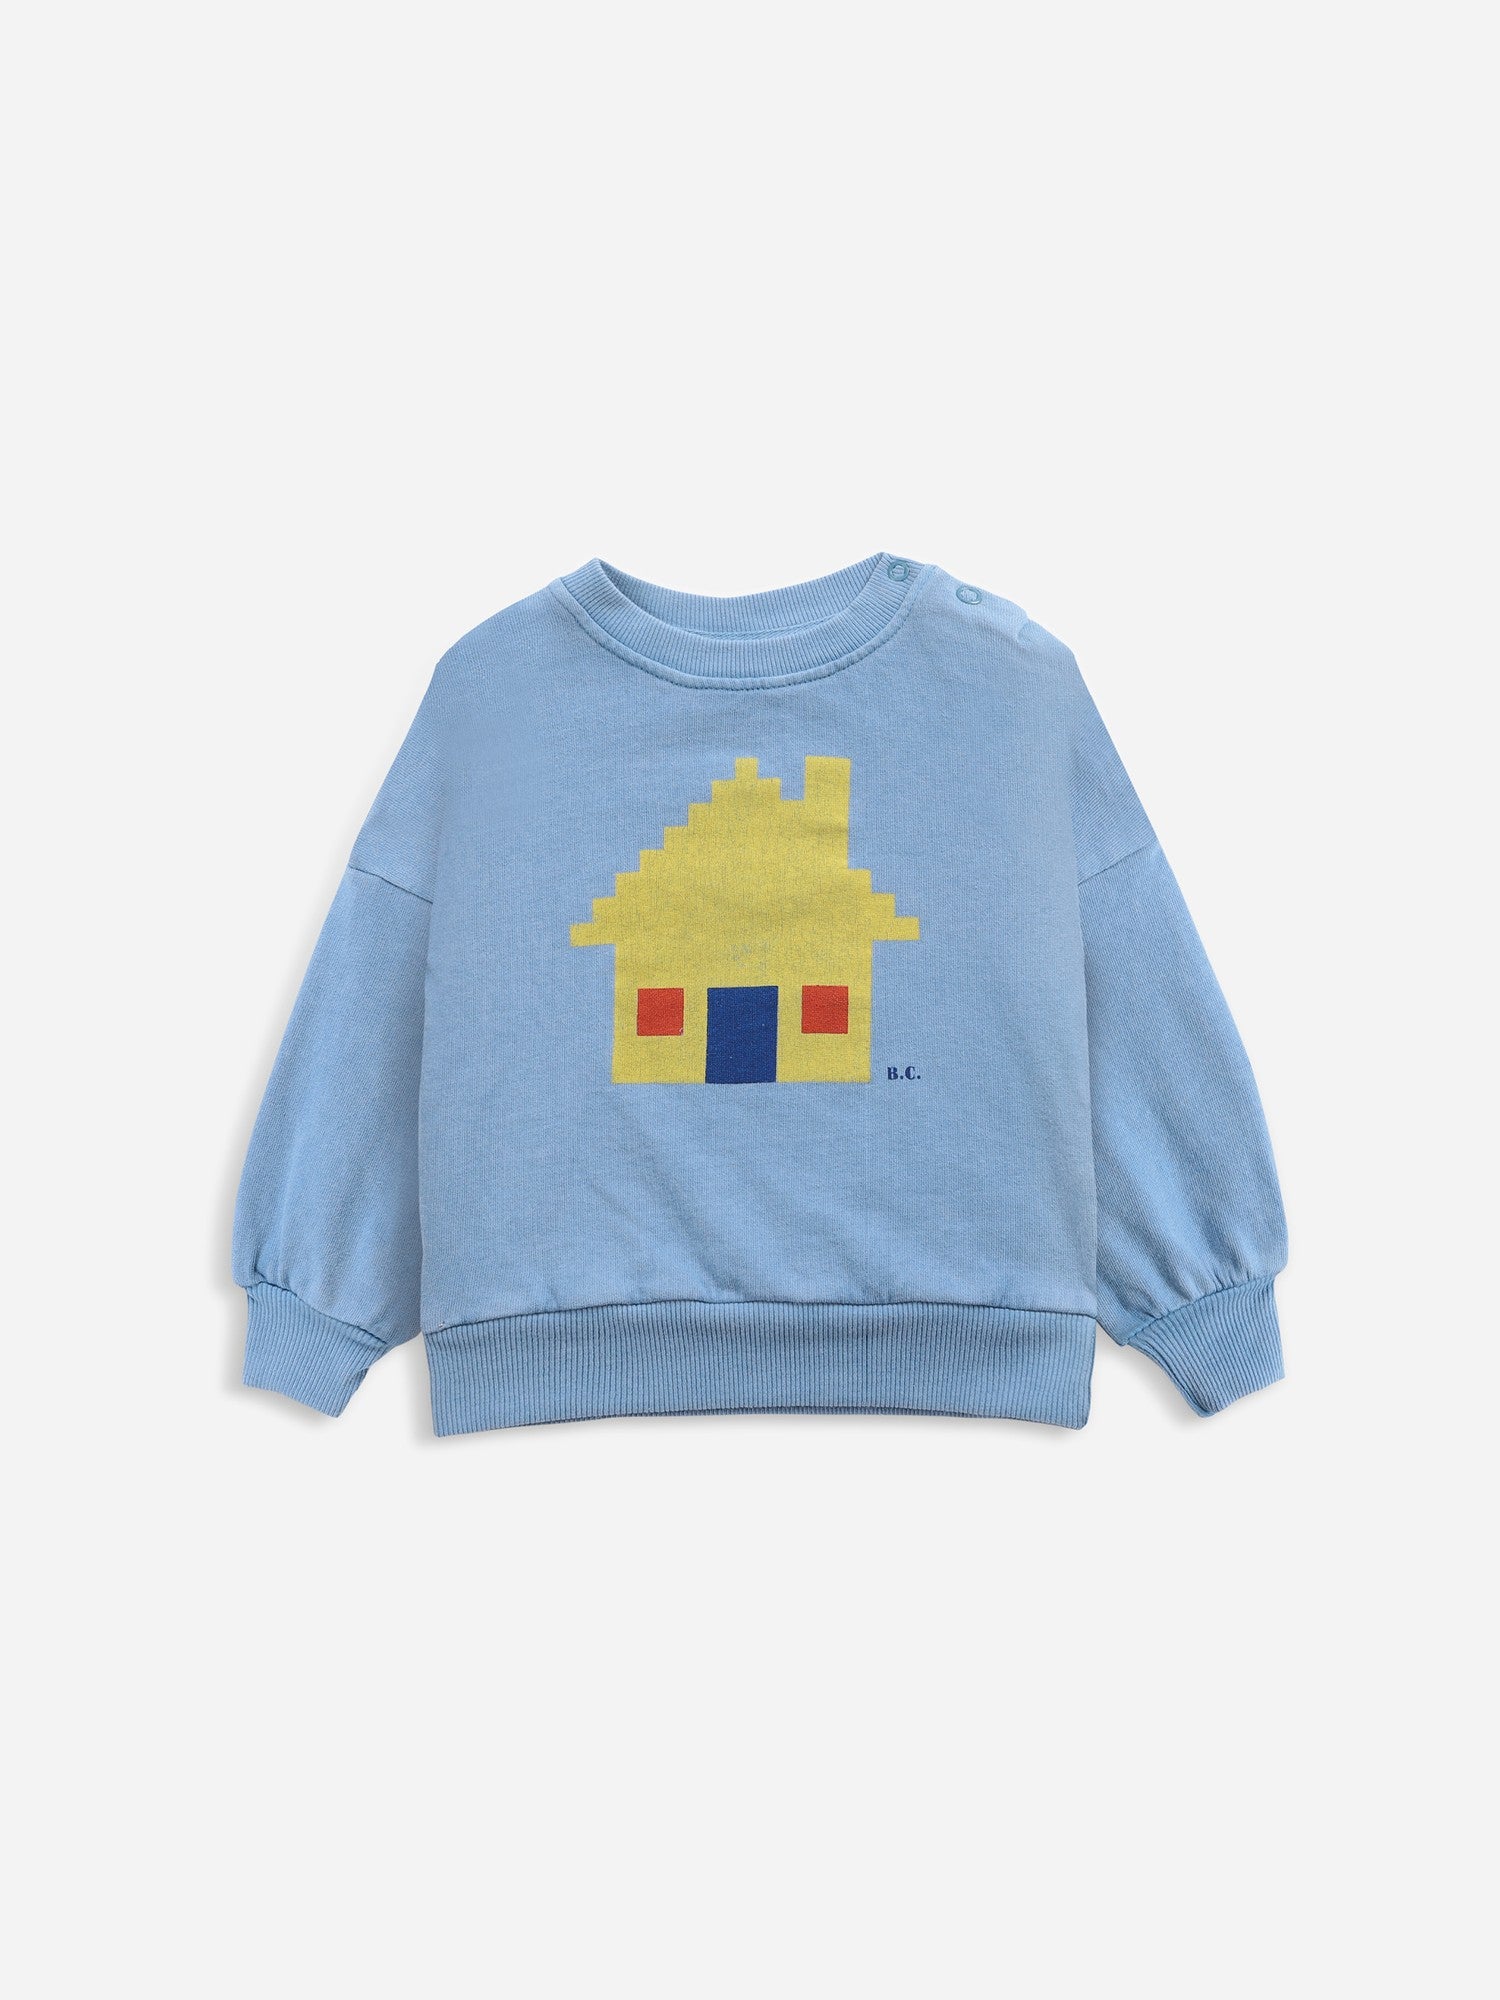 Baby Boys & Girls Blue Cotton Sweatshirt